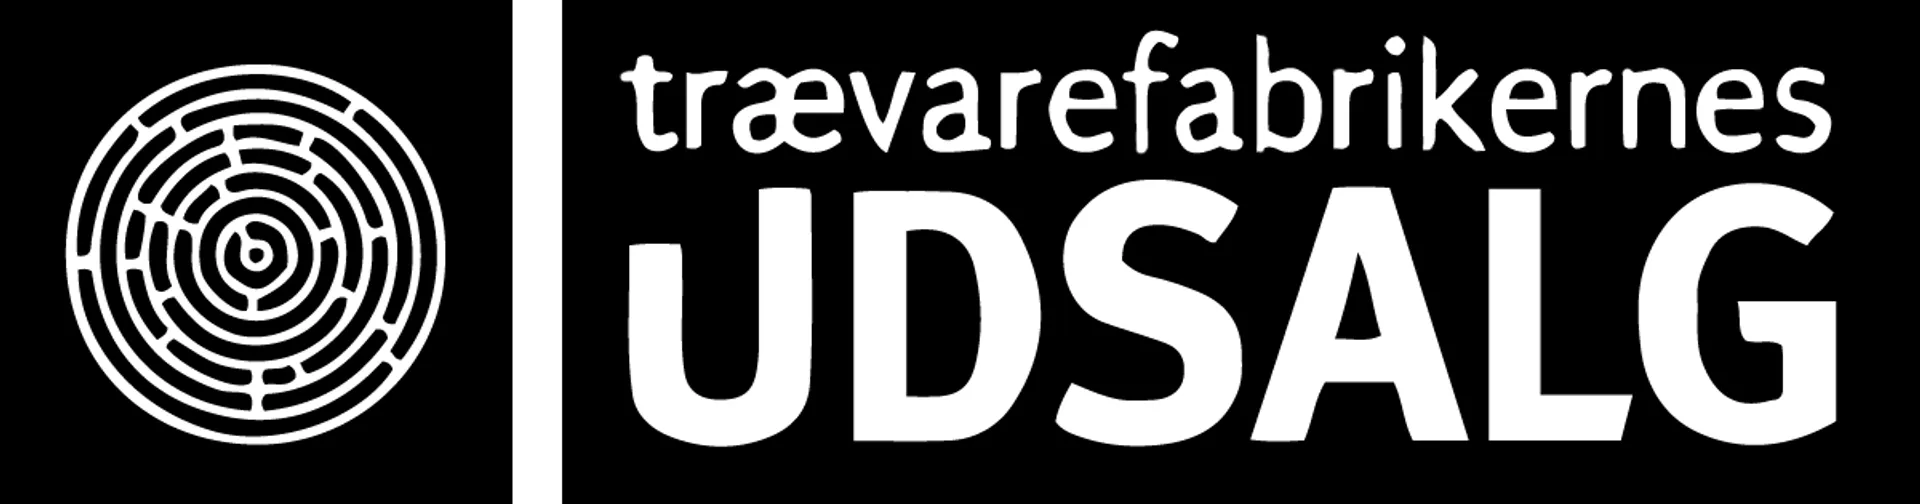 TRÆVAREFABRIKERNES UDSALG logo